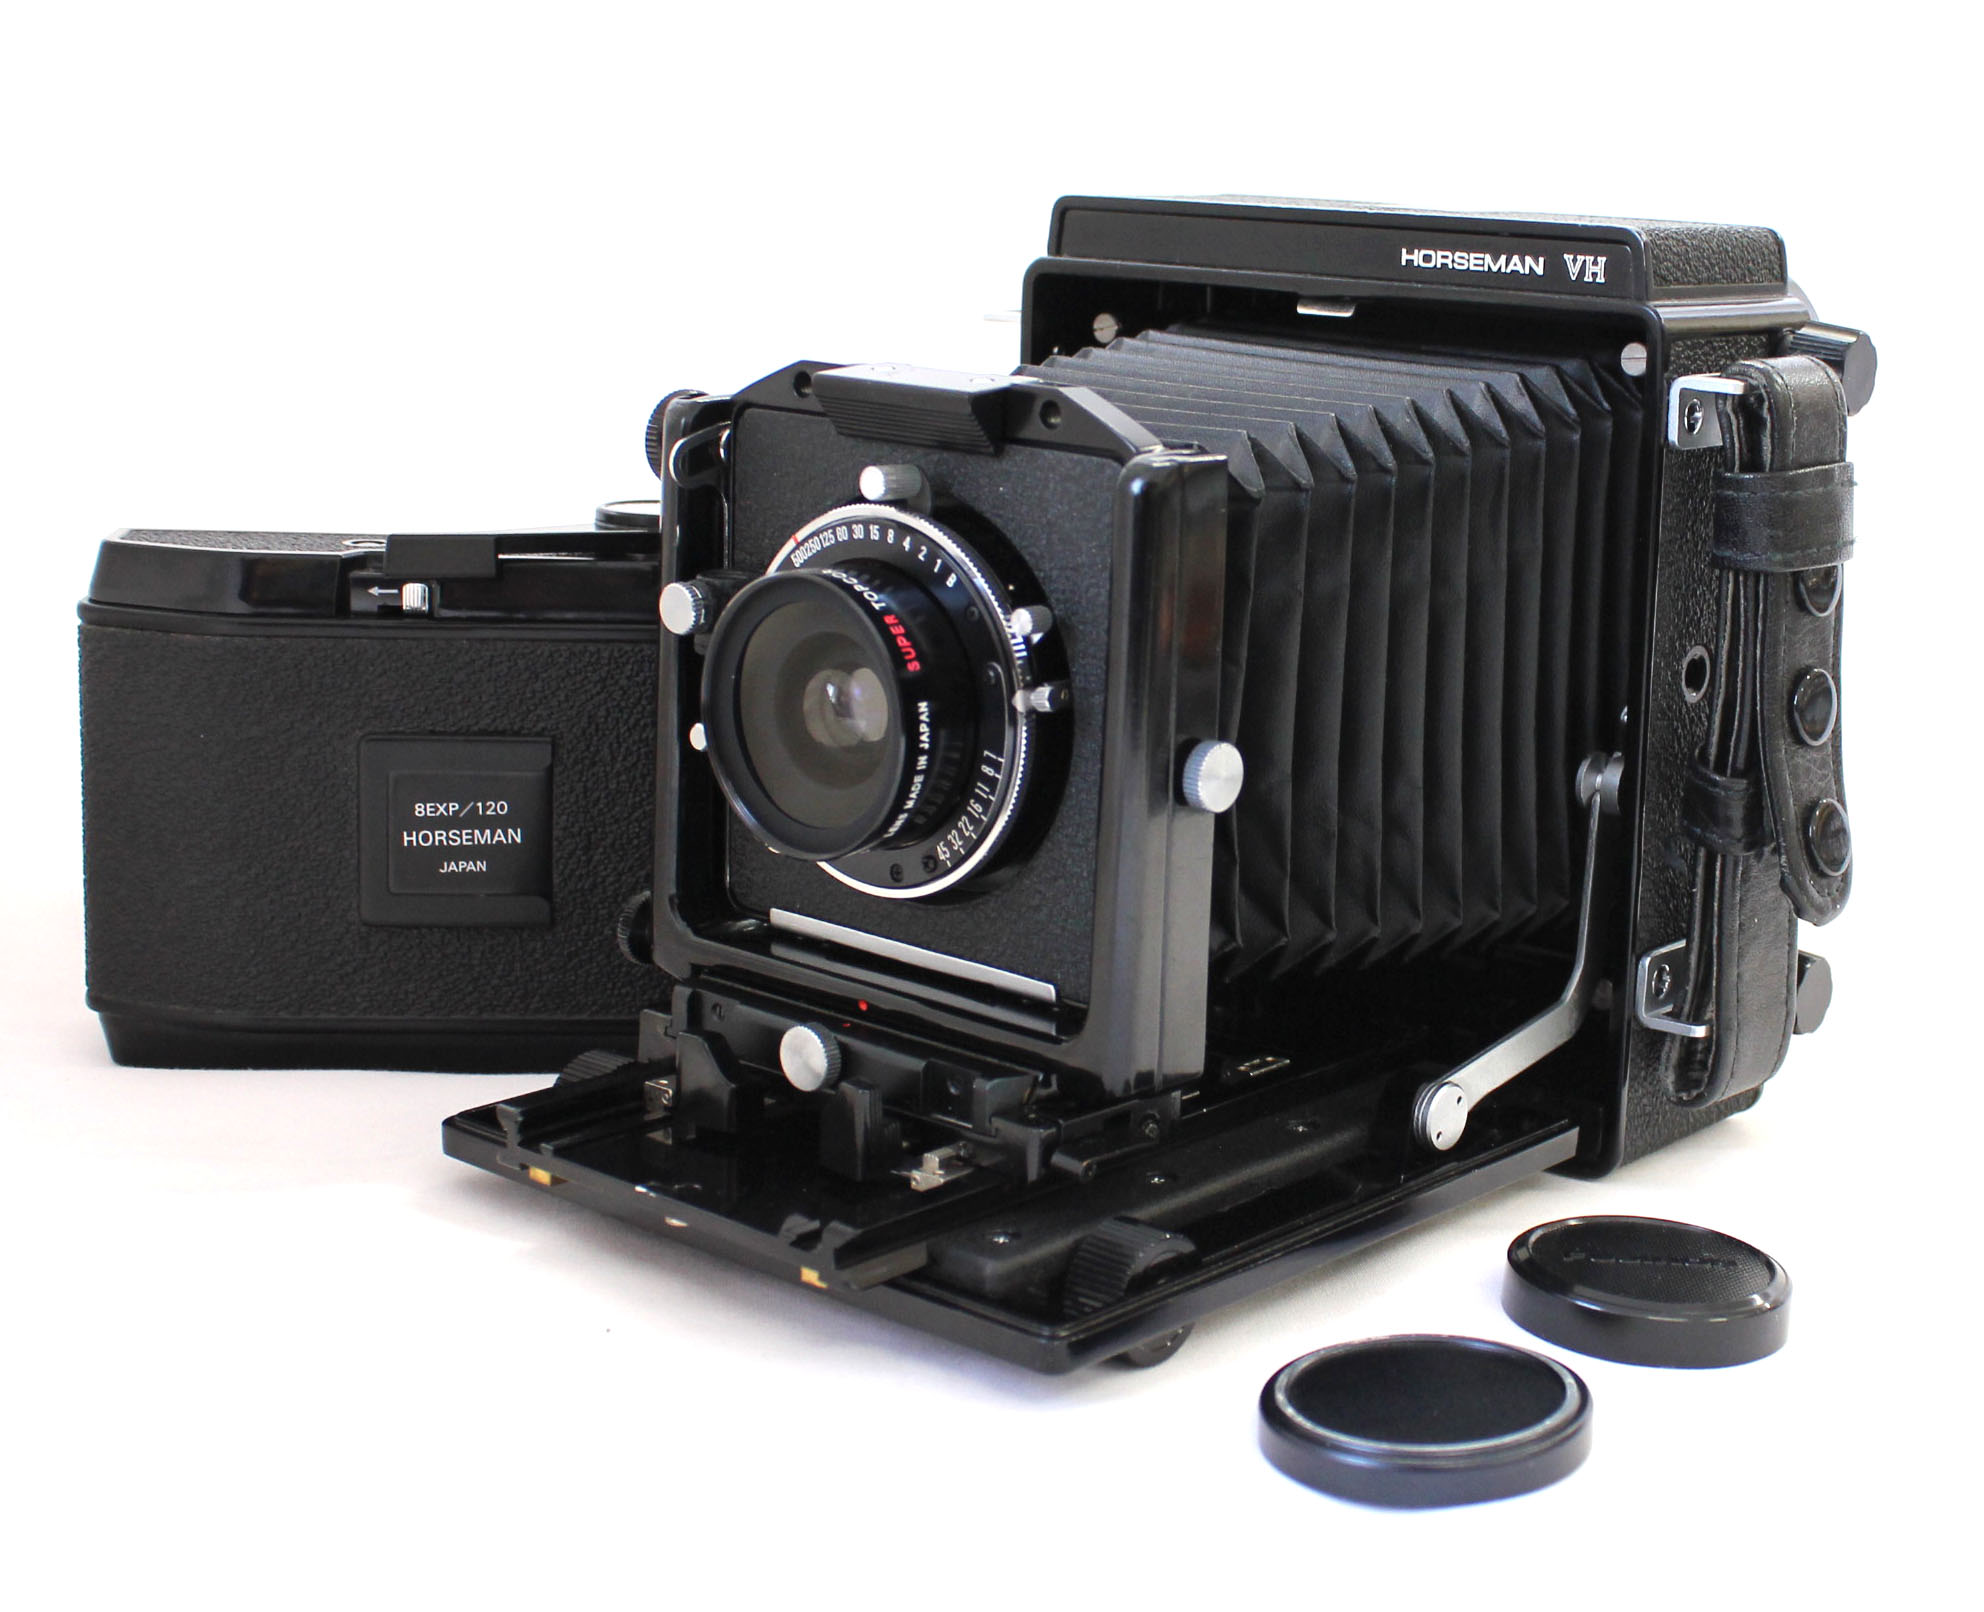 Topcon Horseman VH Field Camera with Super Topcor 65mm F/7 Lens & 8EXP/120  6x9 Film Back from Japan (C2083) | Big Fish J-Camera (Big Fish J-Shop)